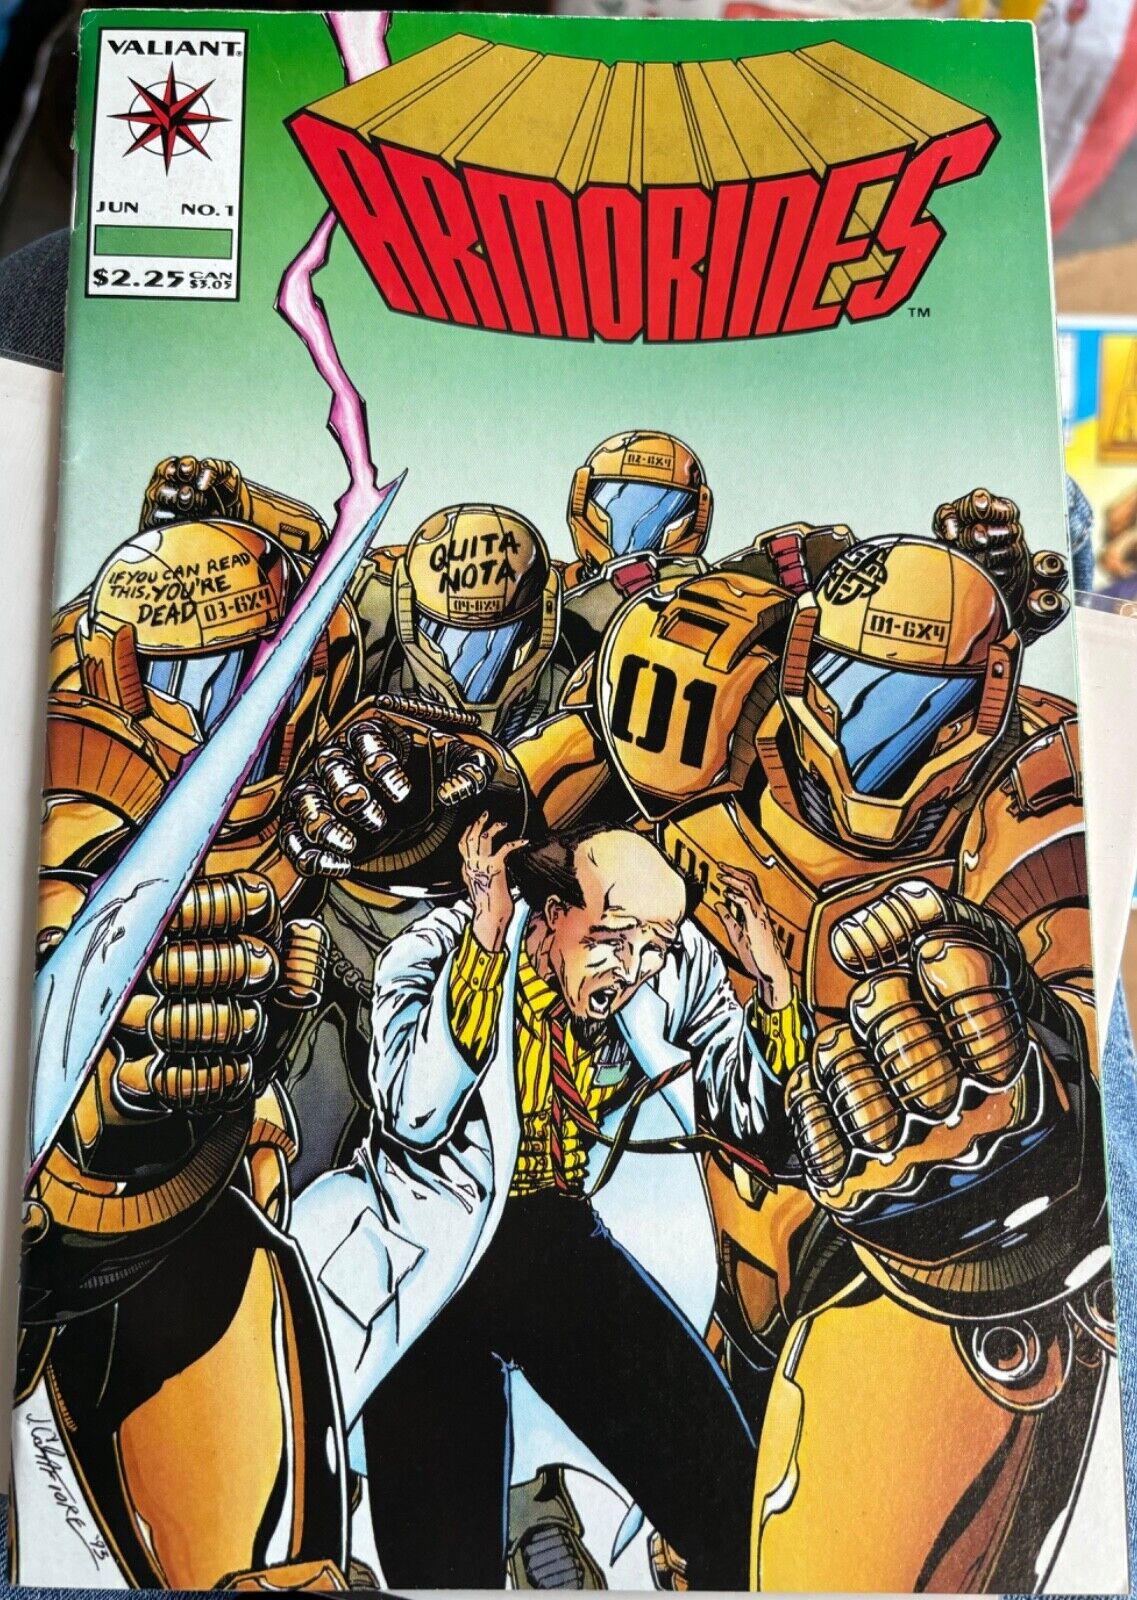 Armorines #1 (Jun 1994, Acclaim / Valiant)